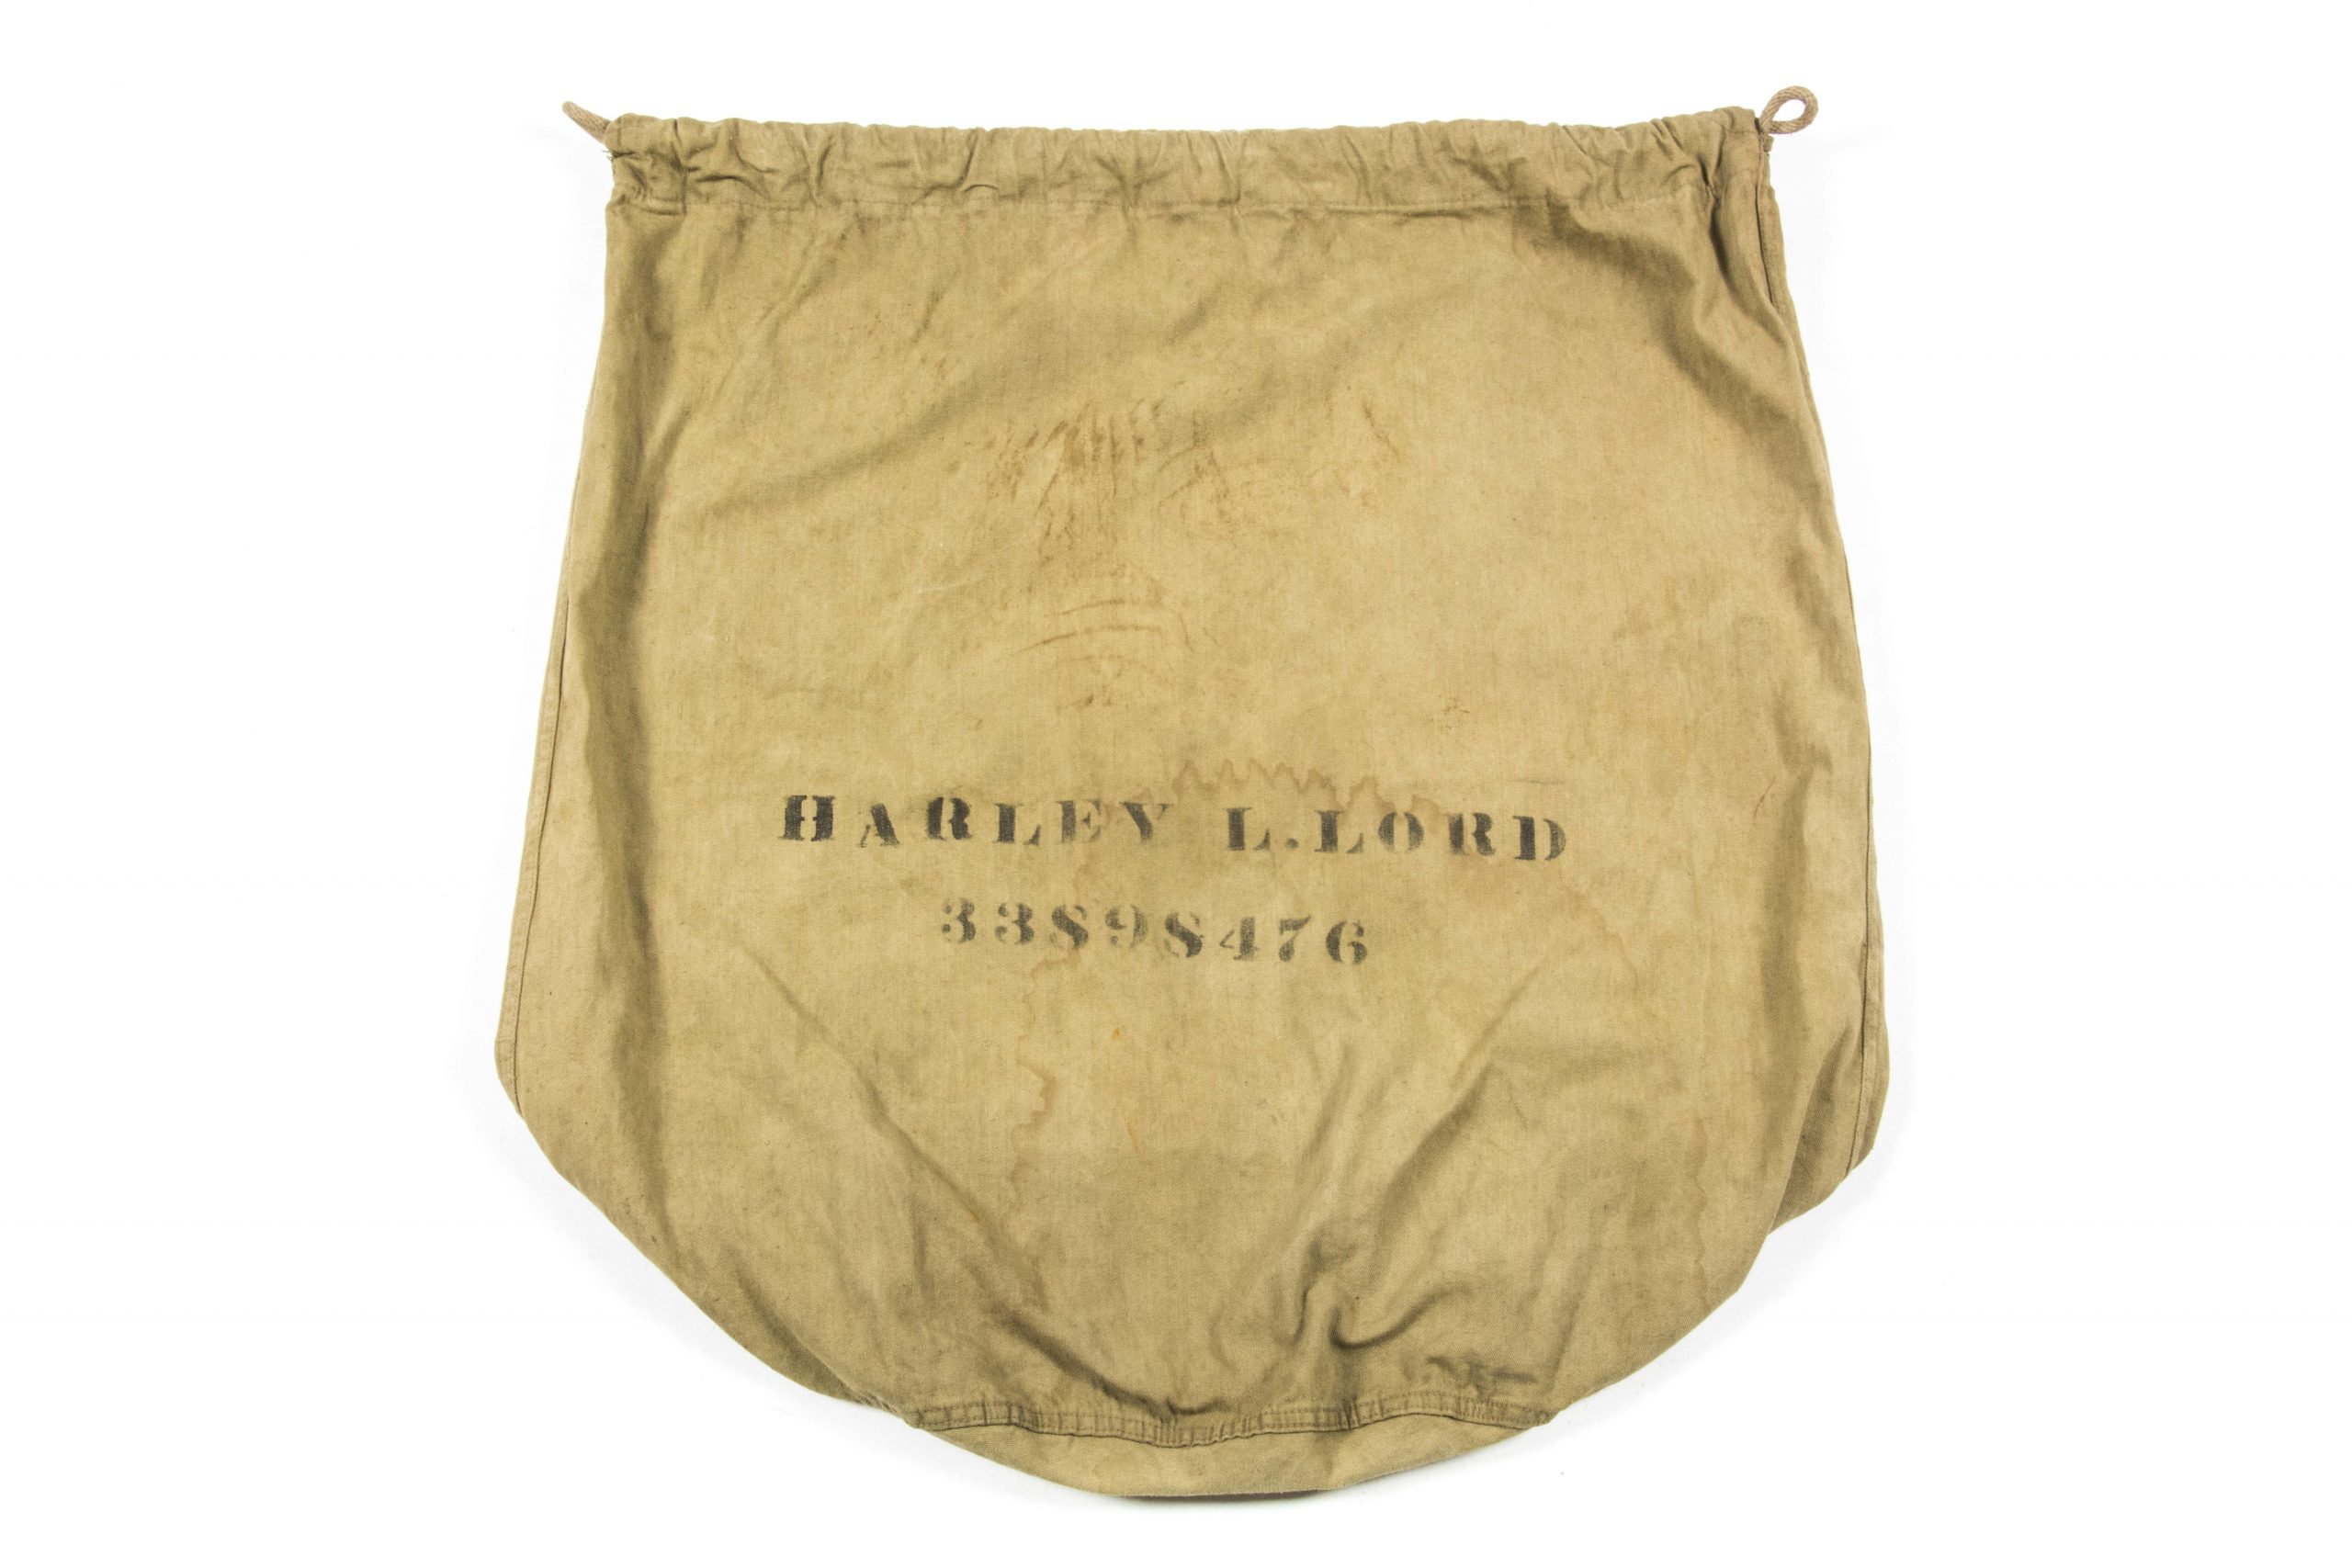 US barrack / duffle bag, Harley L. Lord 33898476 – fjm44